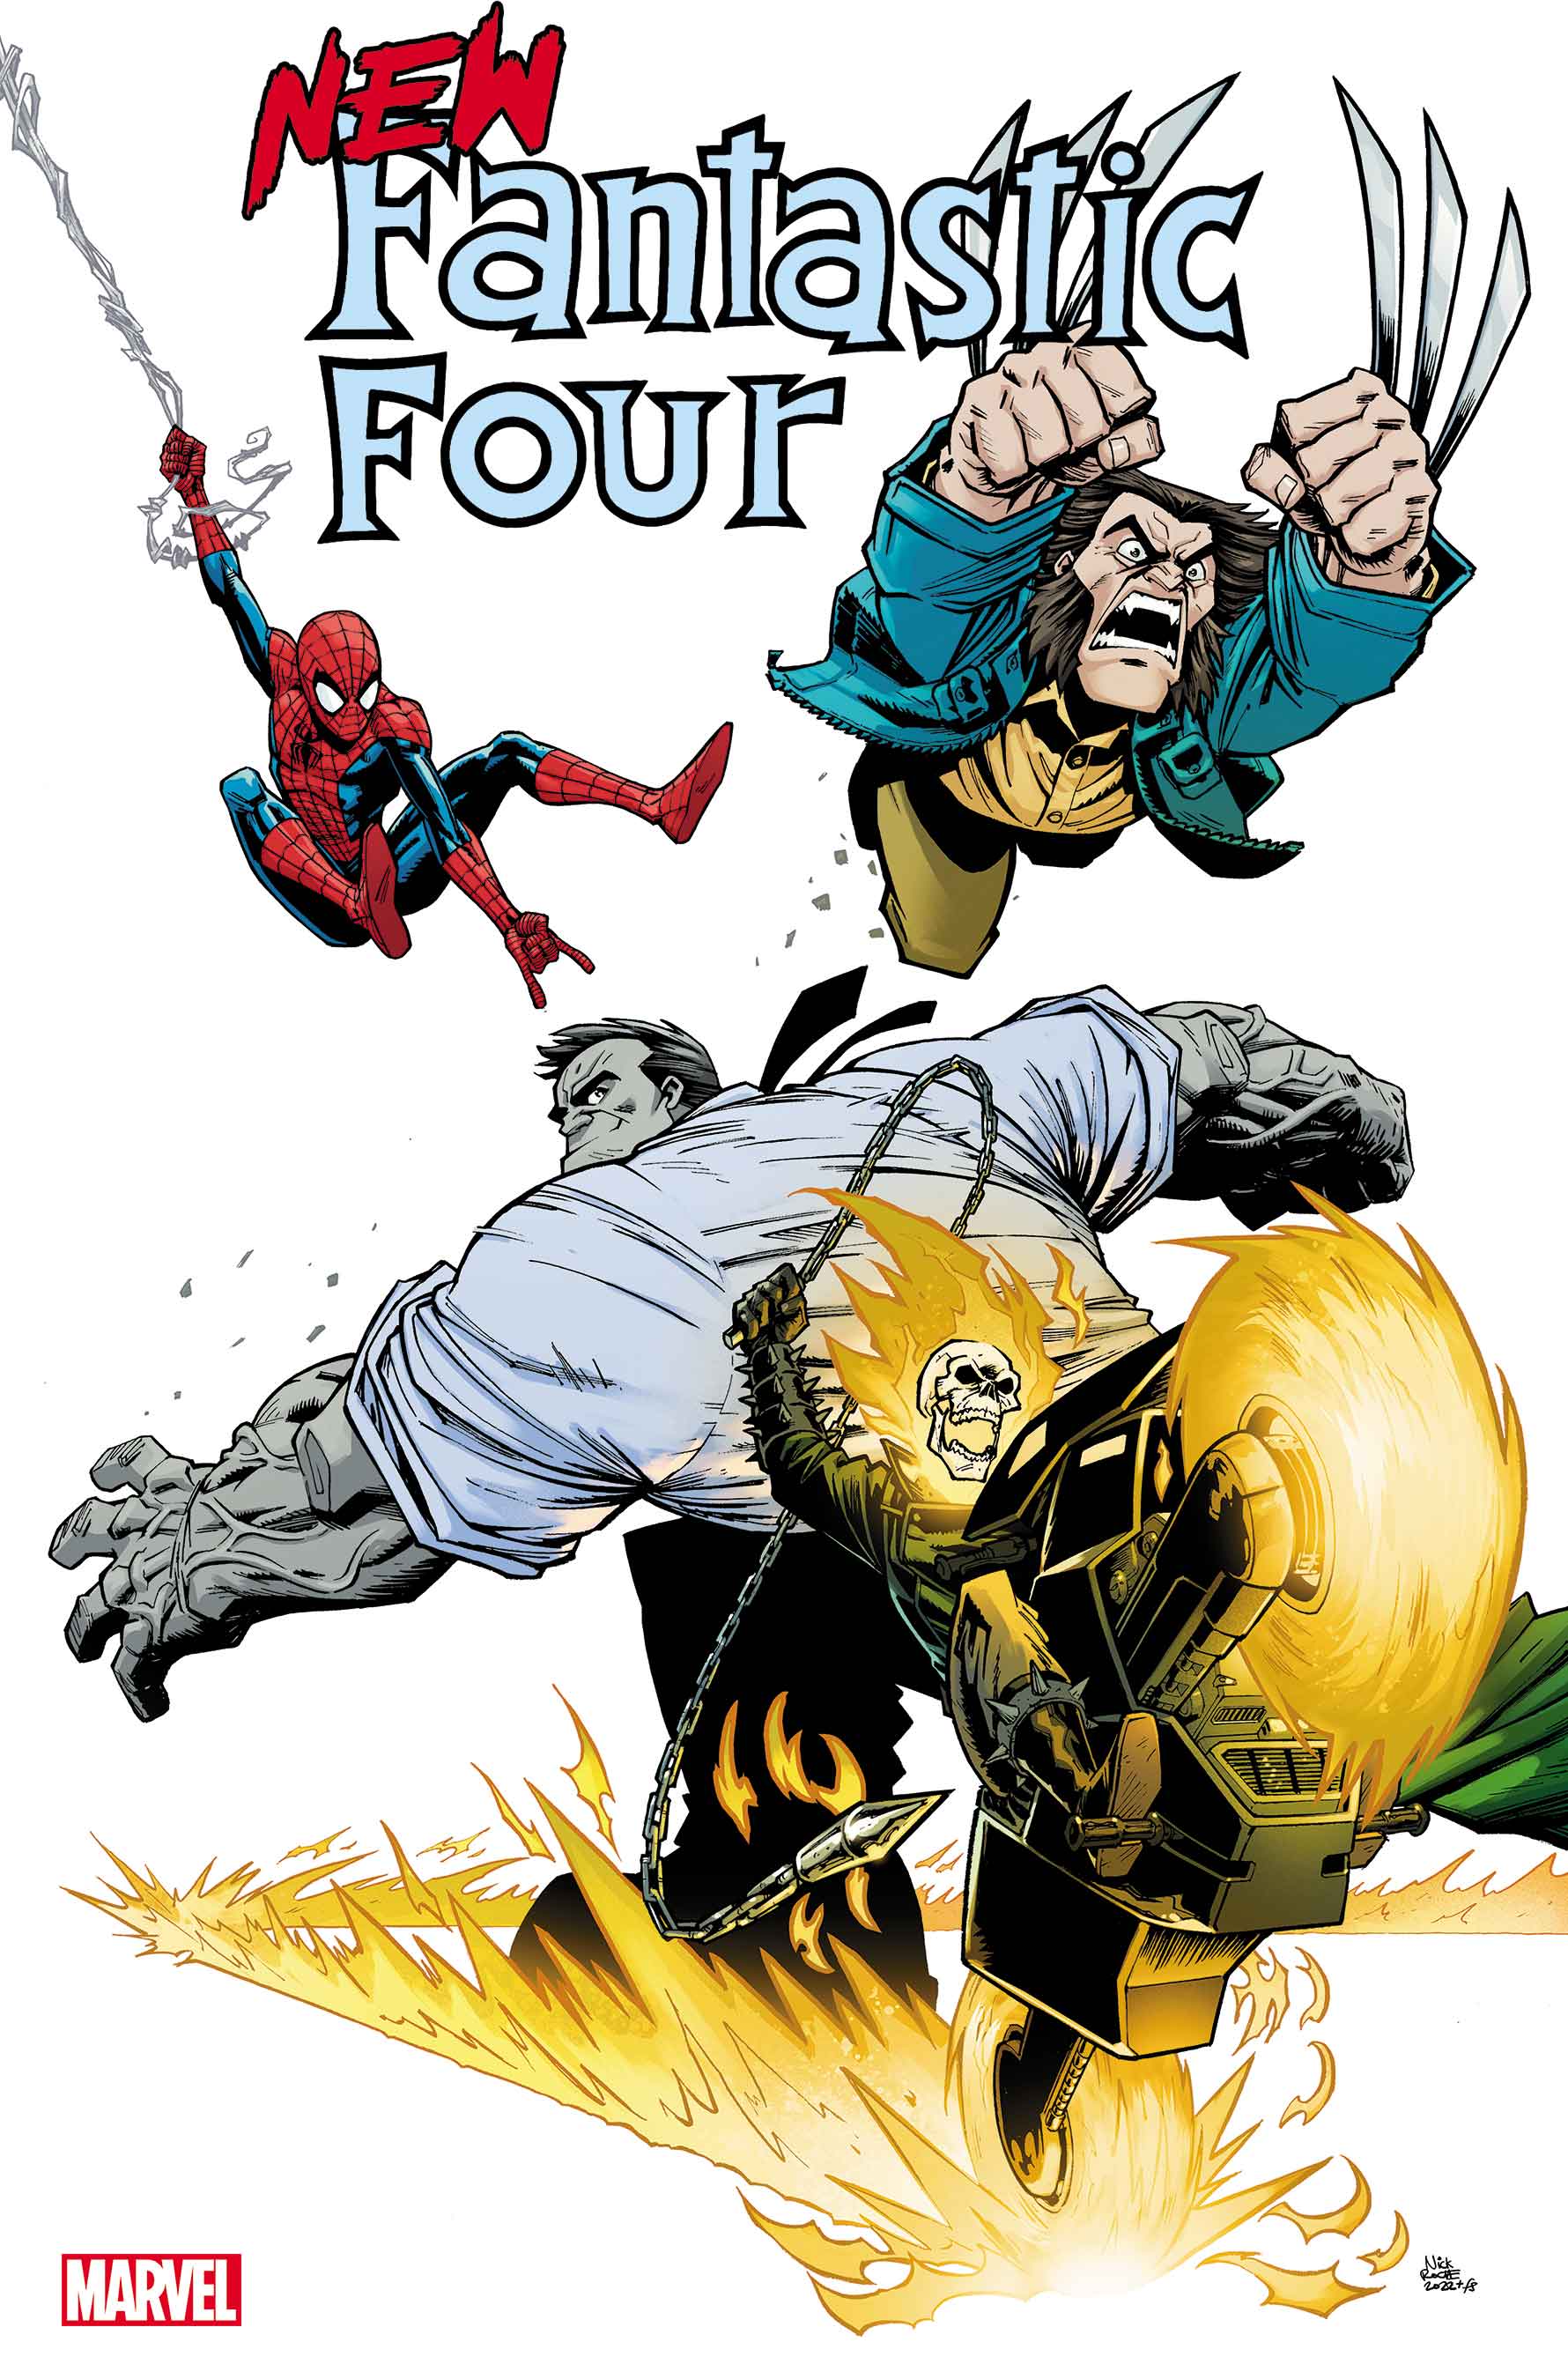 New Fantastic Four (2022) #2